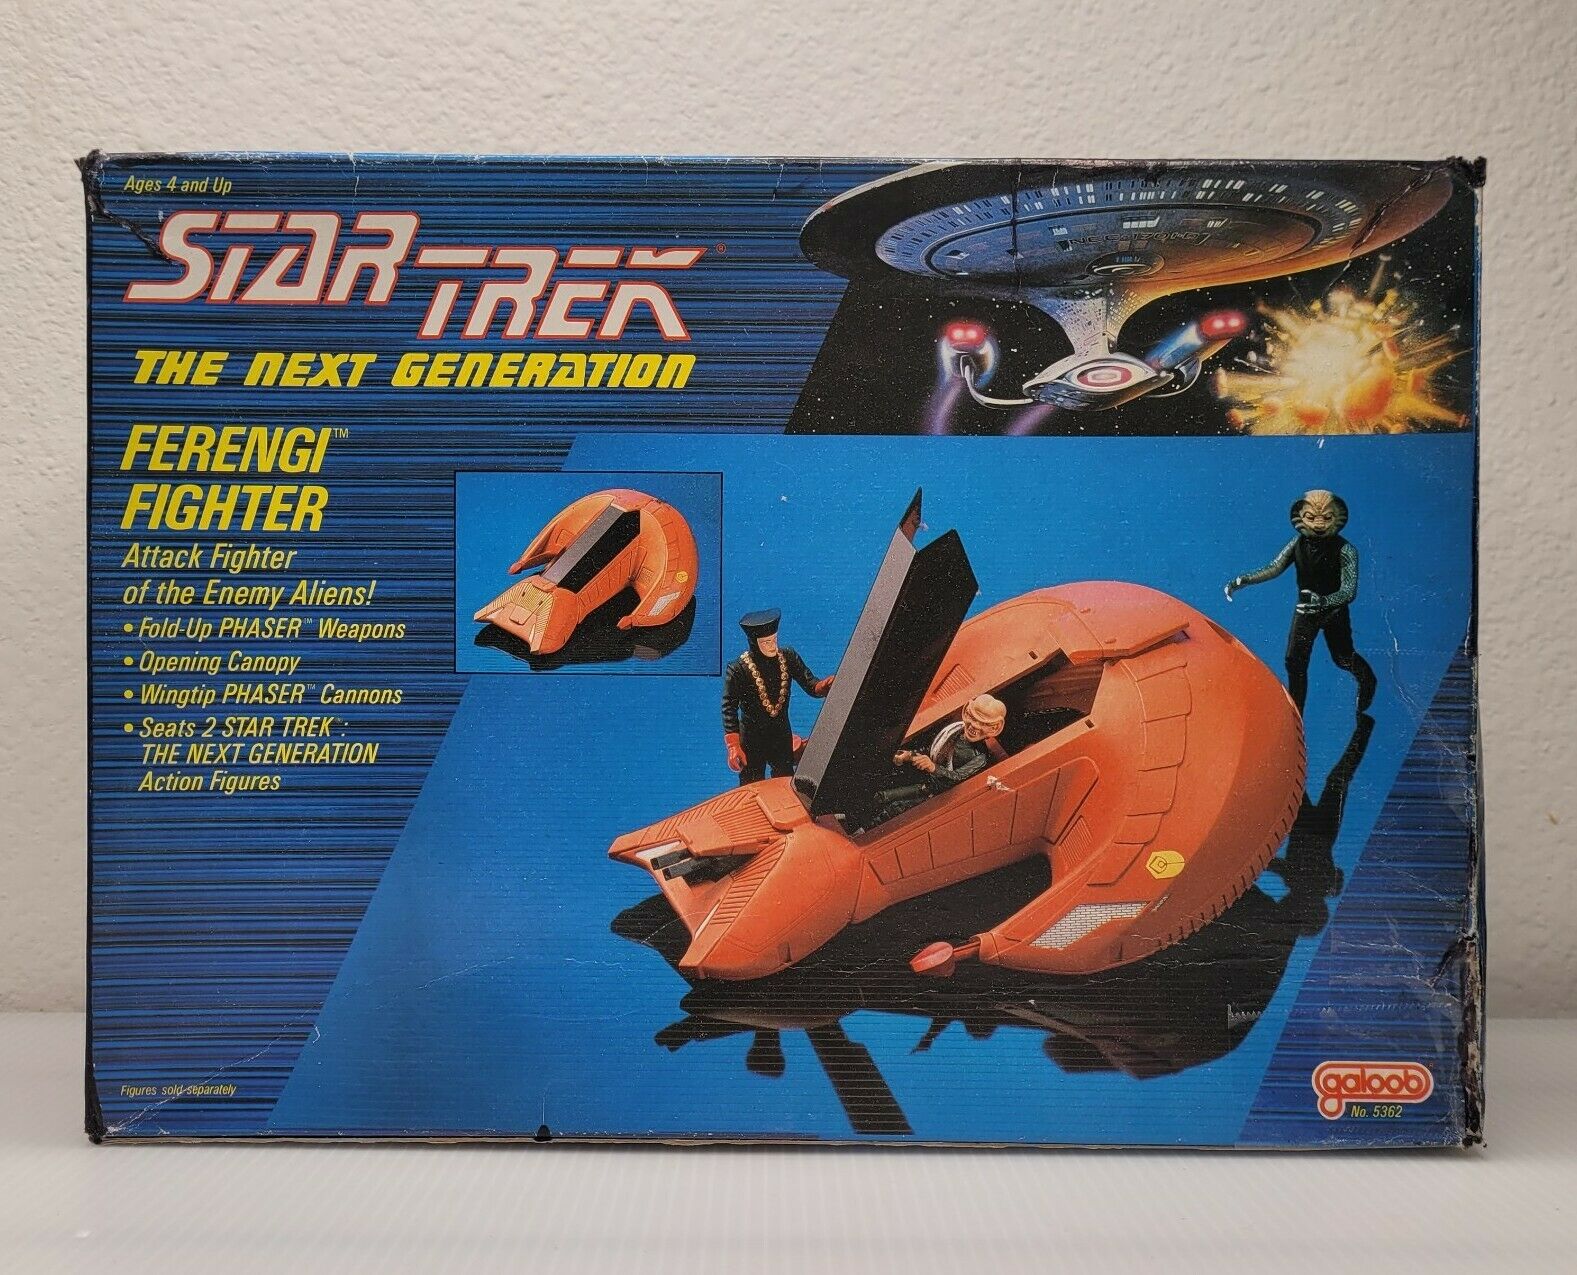 1989 Stat Trek The Next Generation Ferengi Fighter Sealed Box Galoob No. 5362